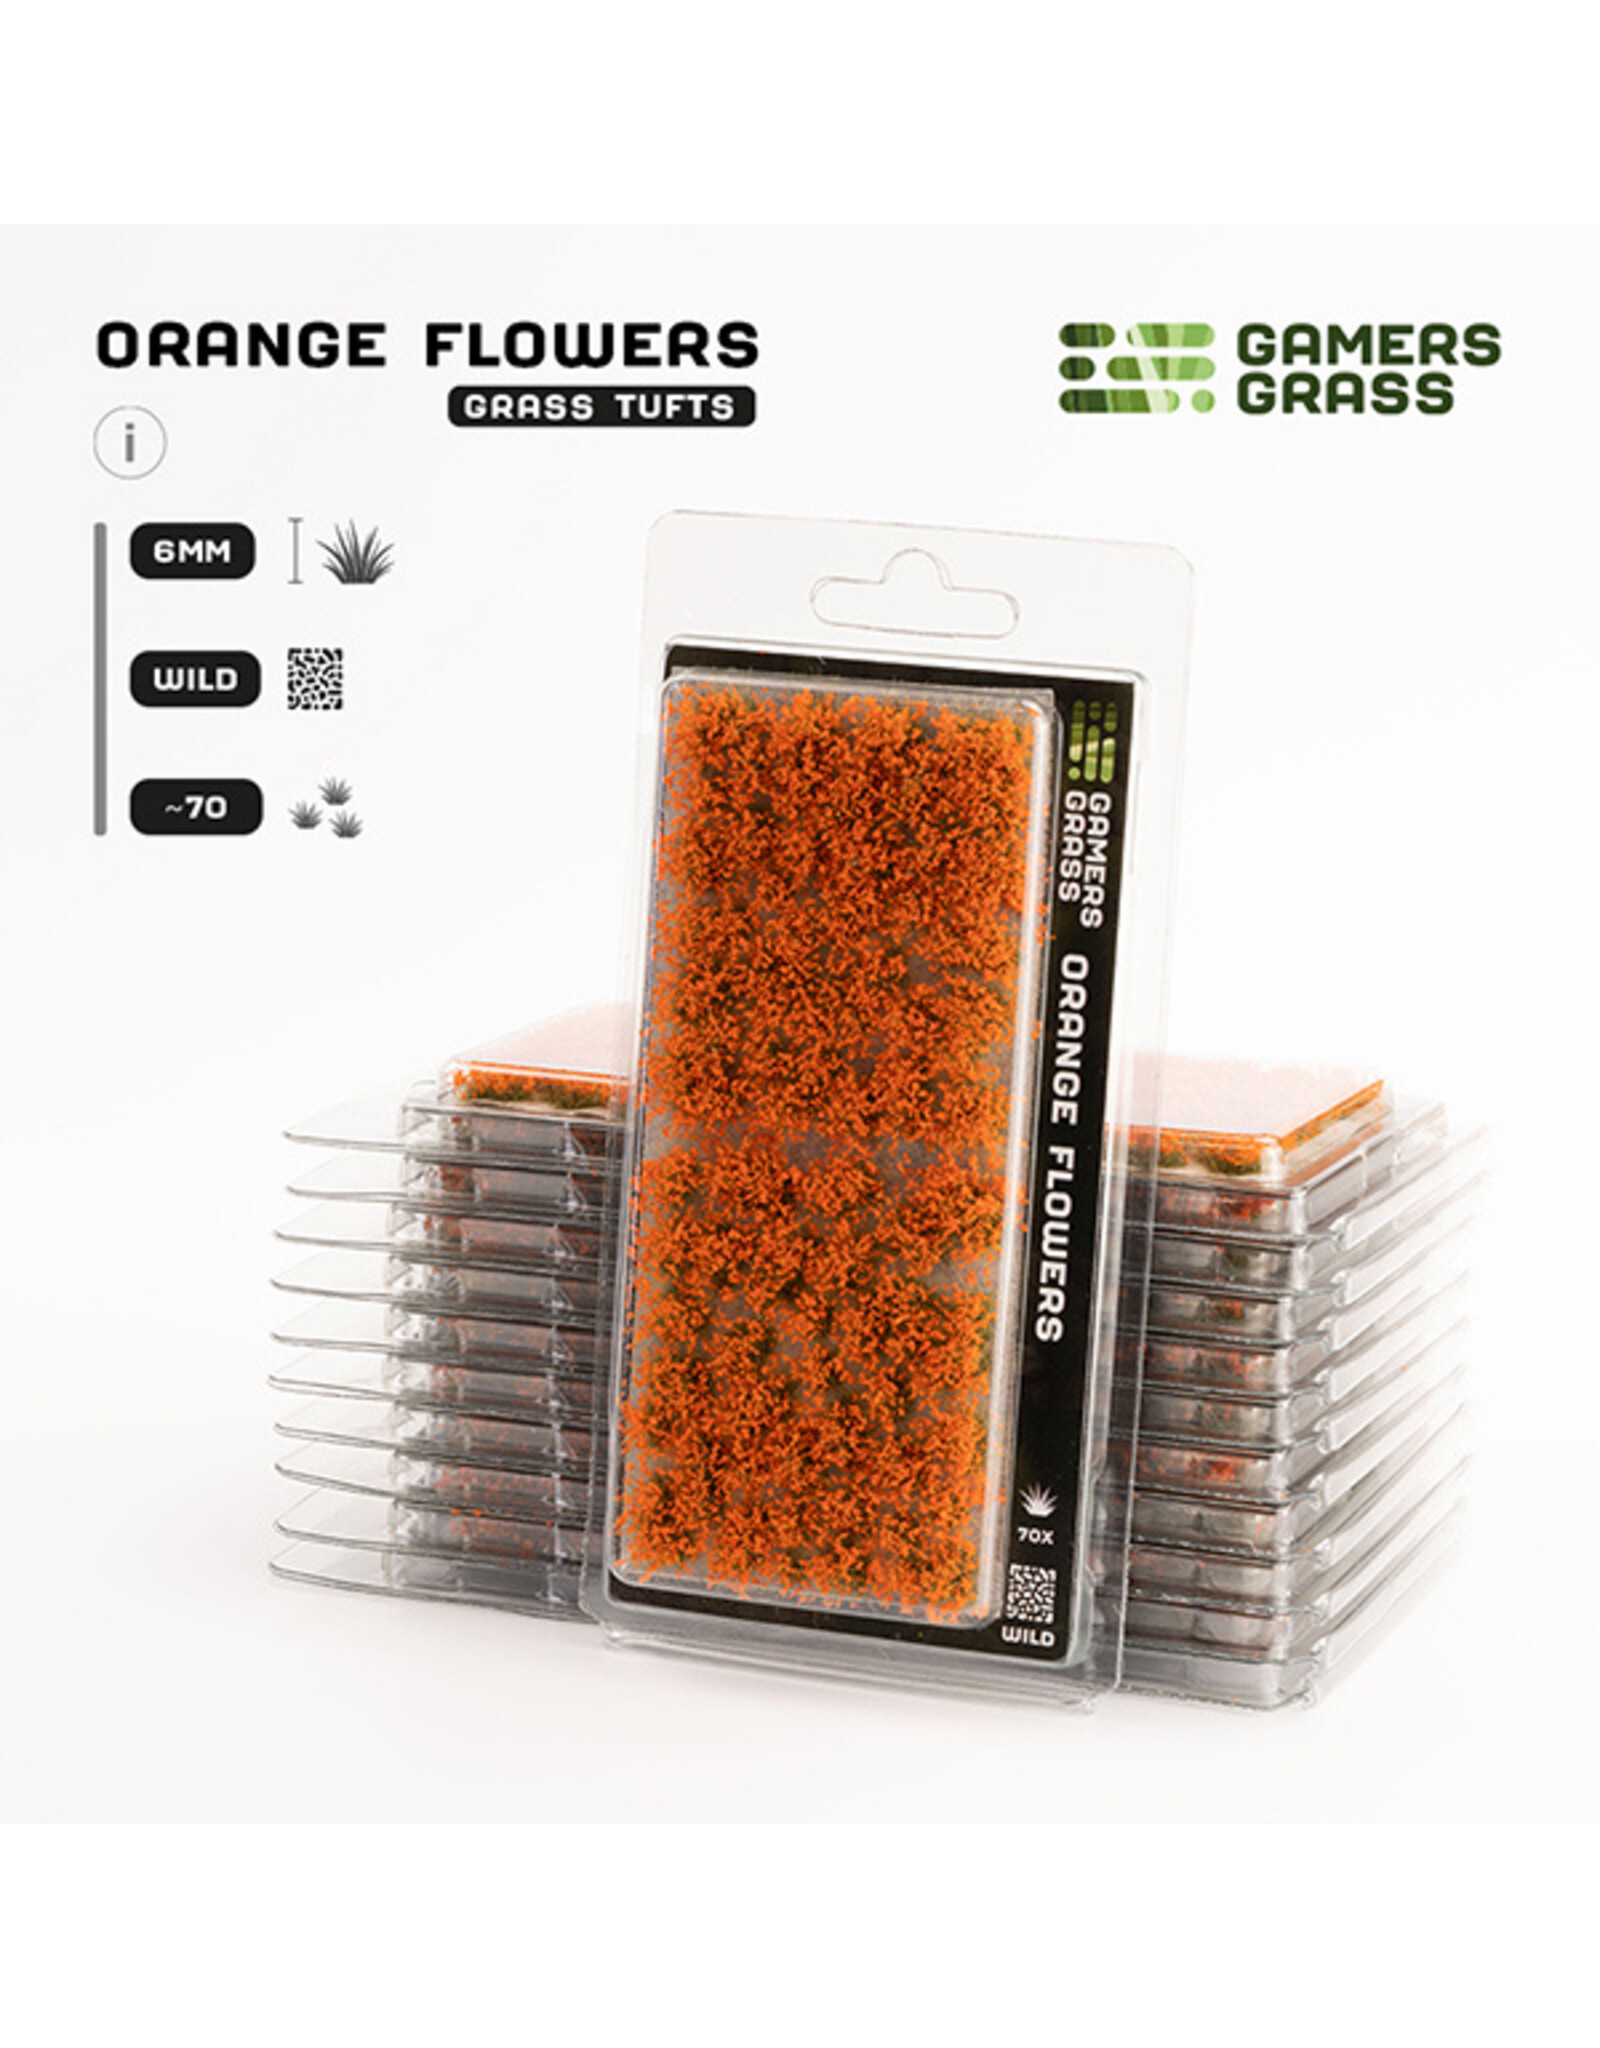 Gamers Grass Gamers Grass Tufts: Tufts- Orange Flowers- Wild